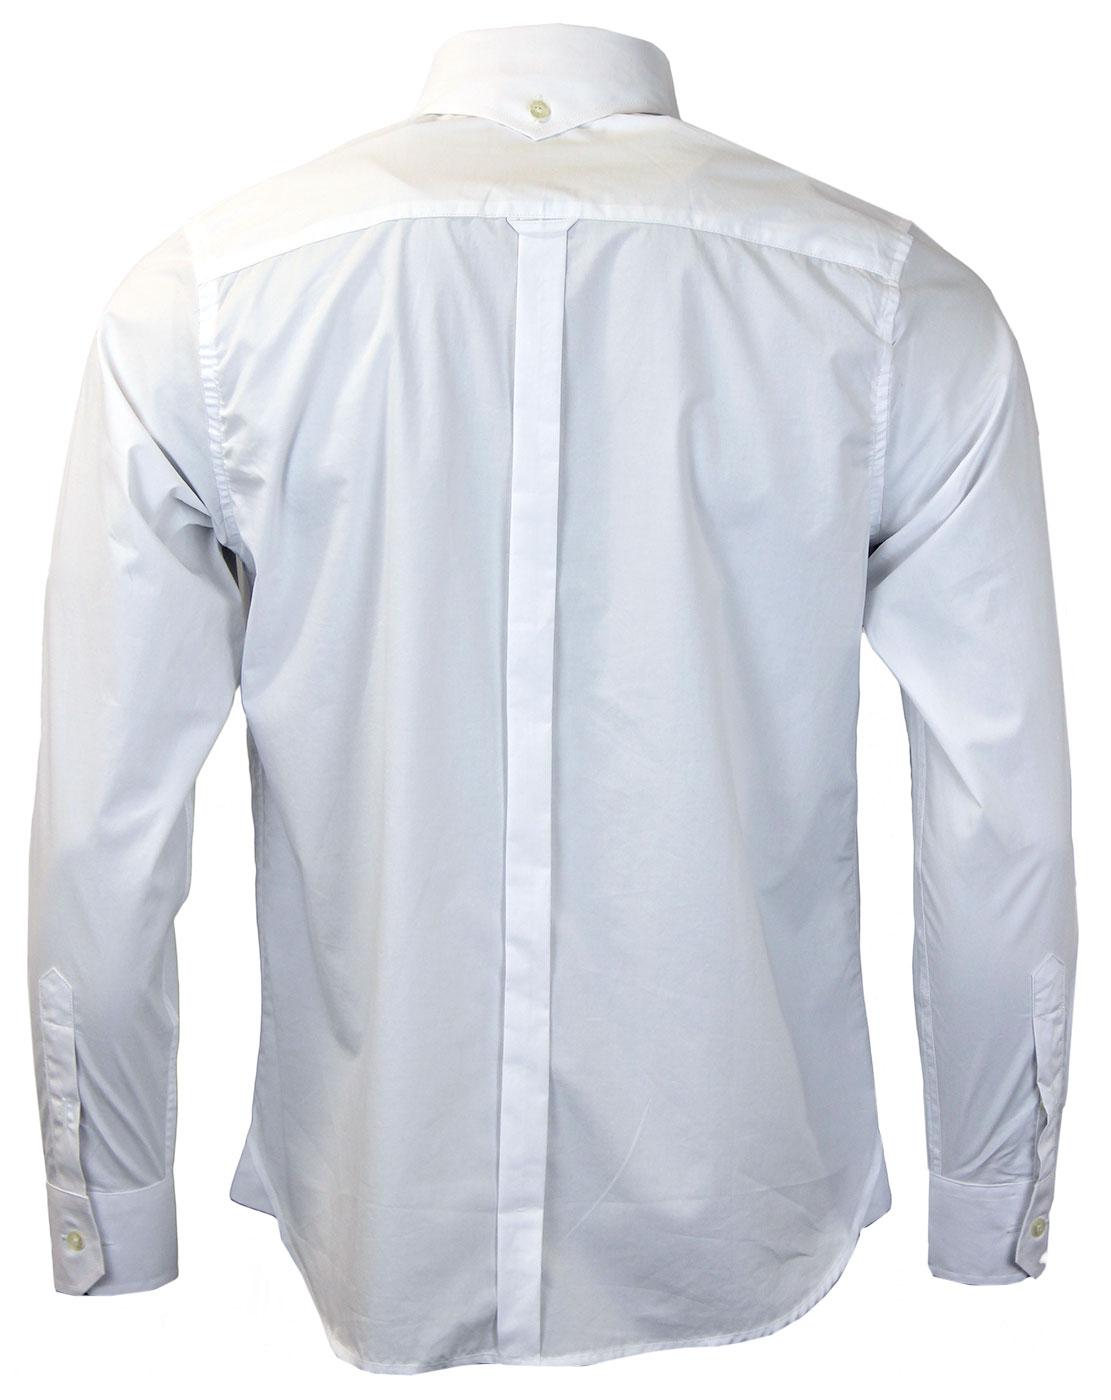 DAVID WATTS Retro 1960s Mod Spearpoint Collar Shirt in White